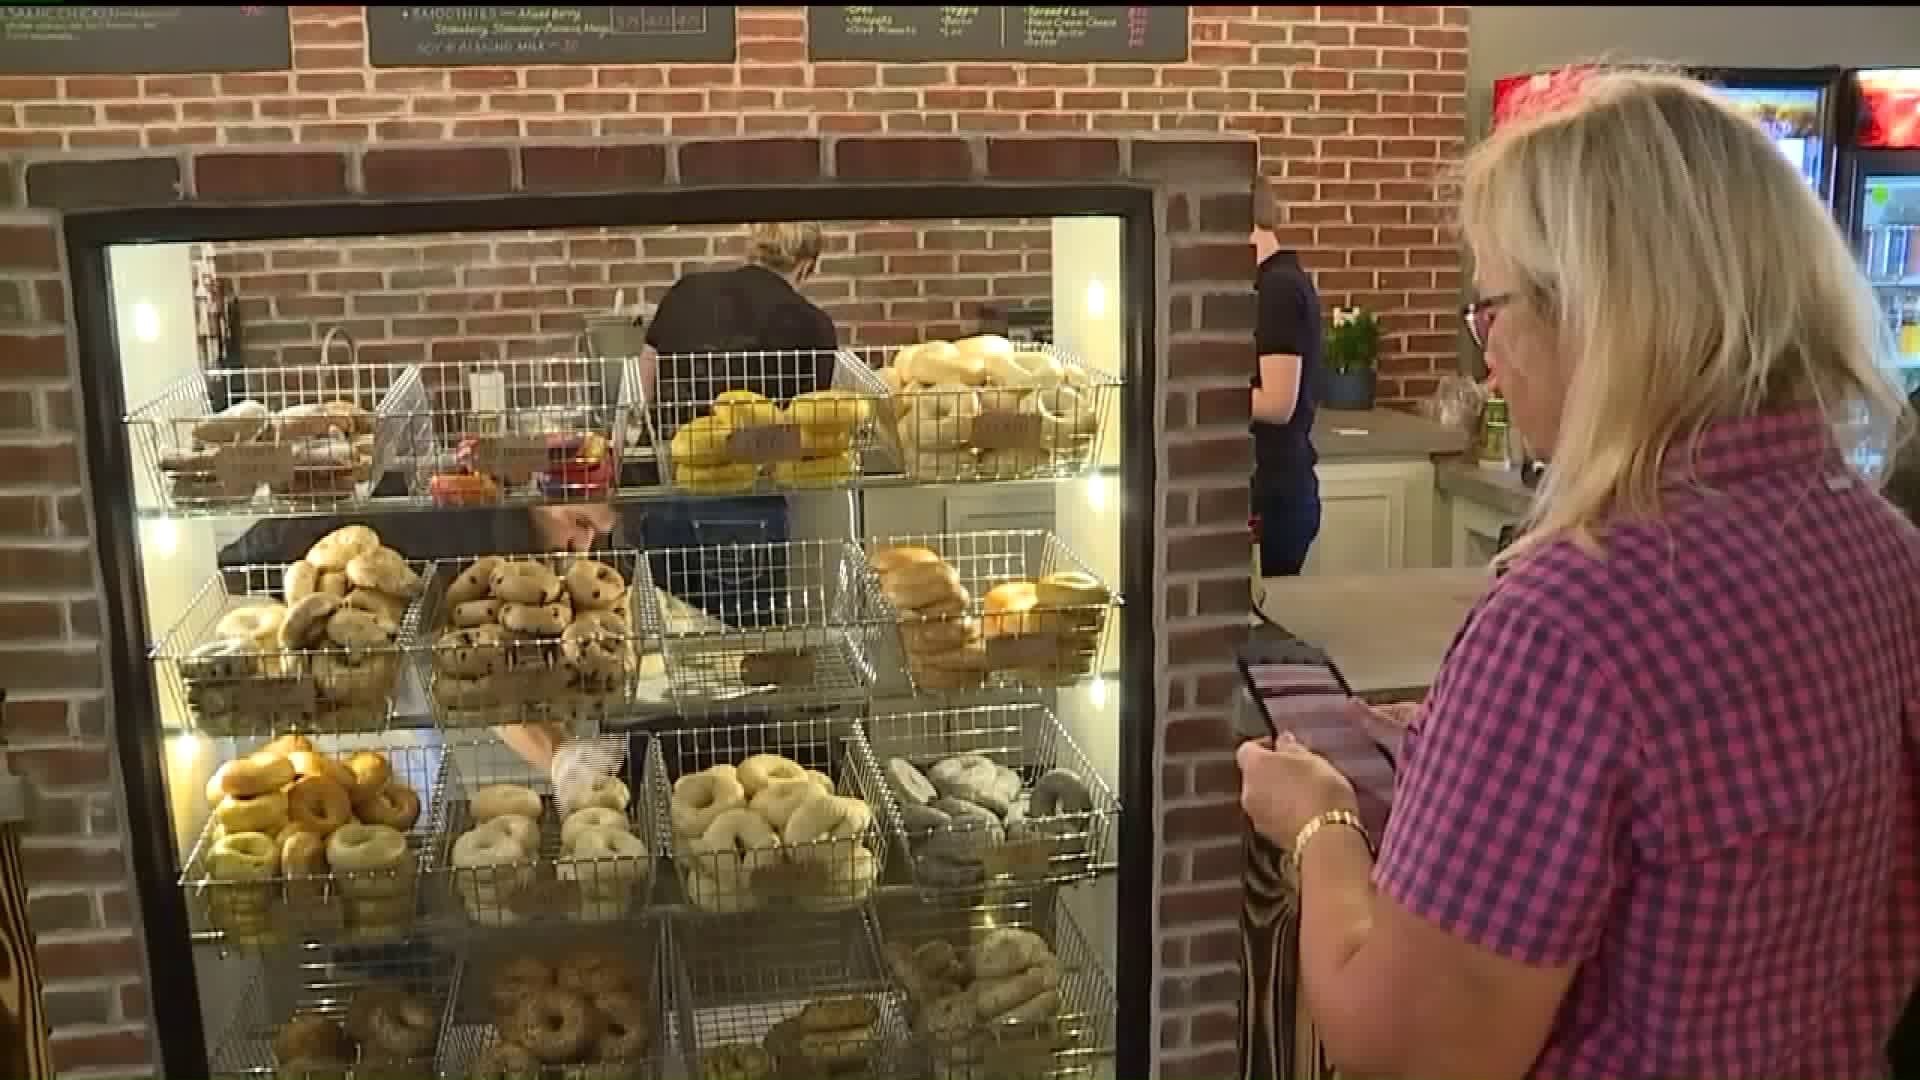 New Bagel Shop Brings Business to Lewisburg